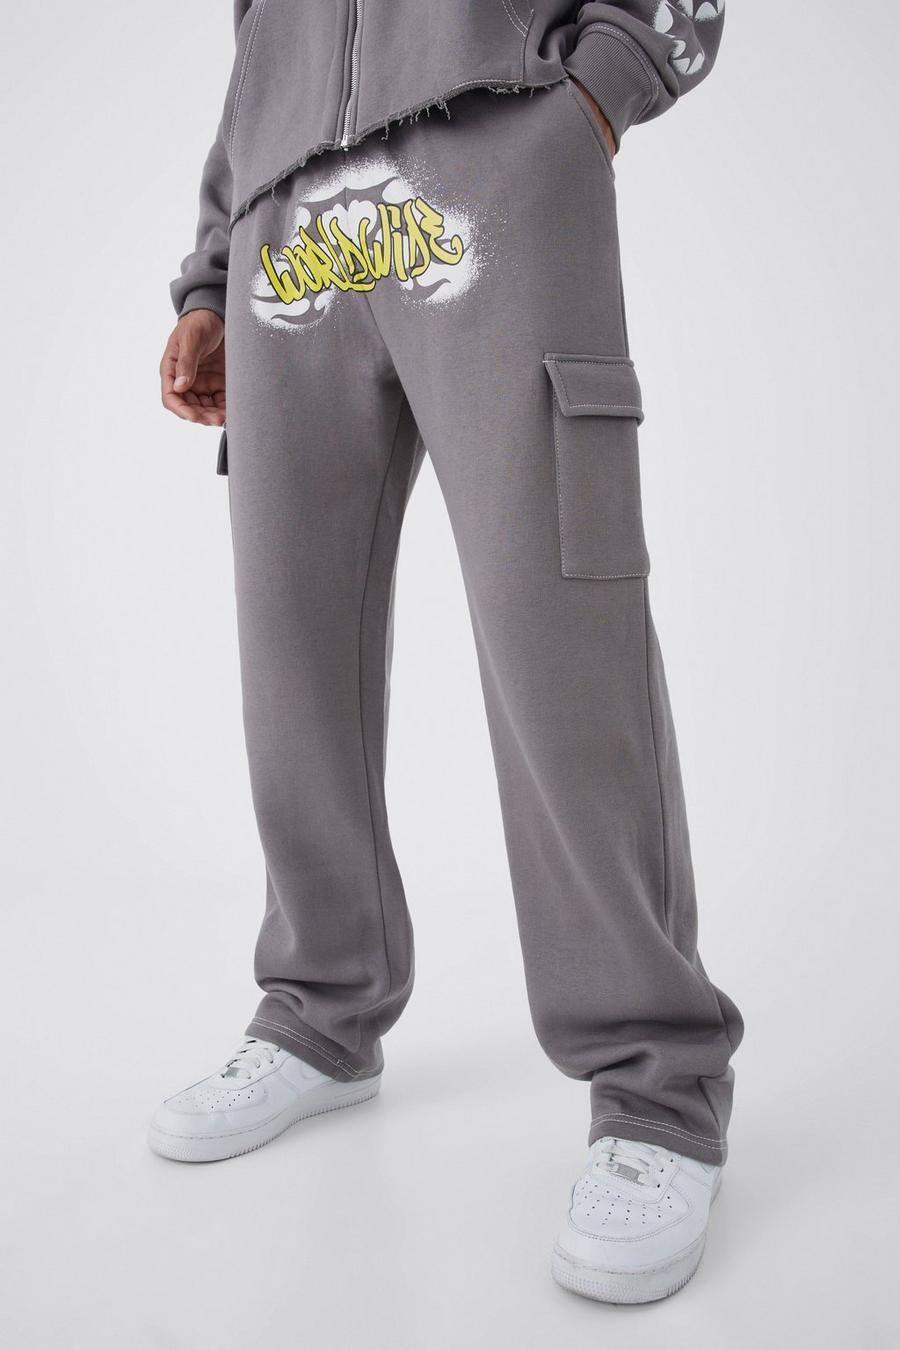 Pantalón deportivo Tall cargo holgado con grafiti Worldwide, Mid grey image number 1